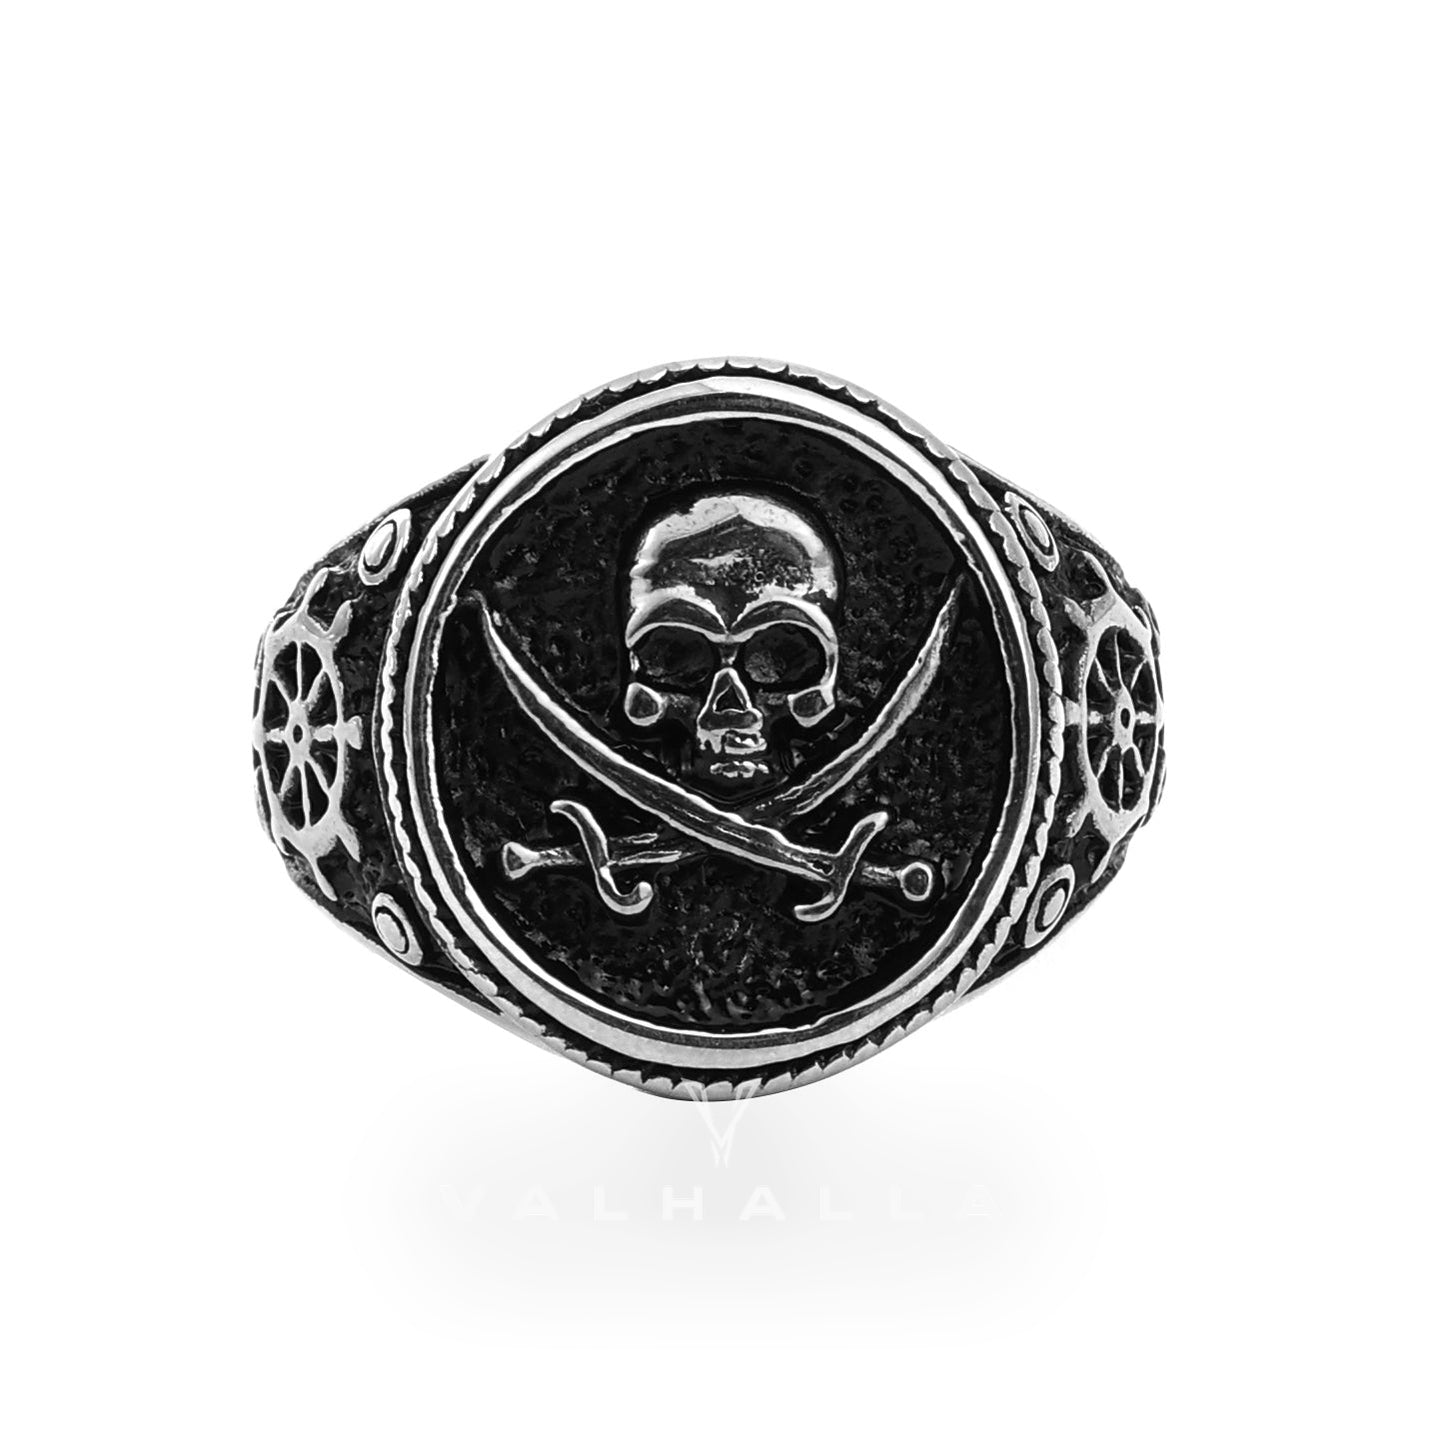 Retro Pirate Stainless Steel Skull Ring